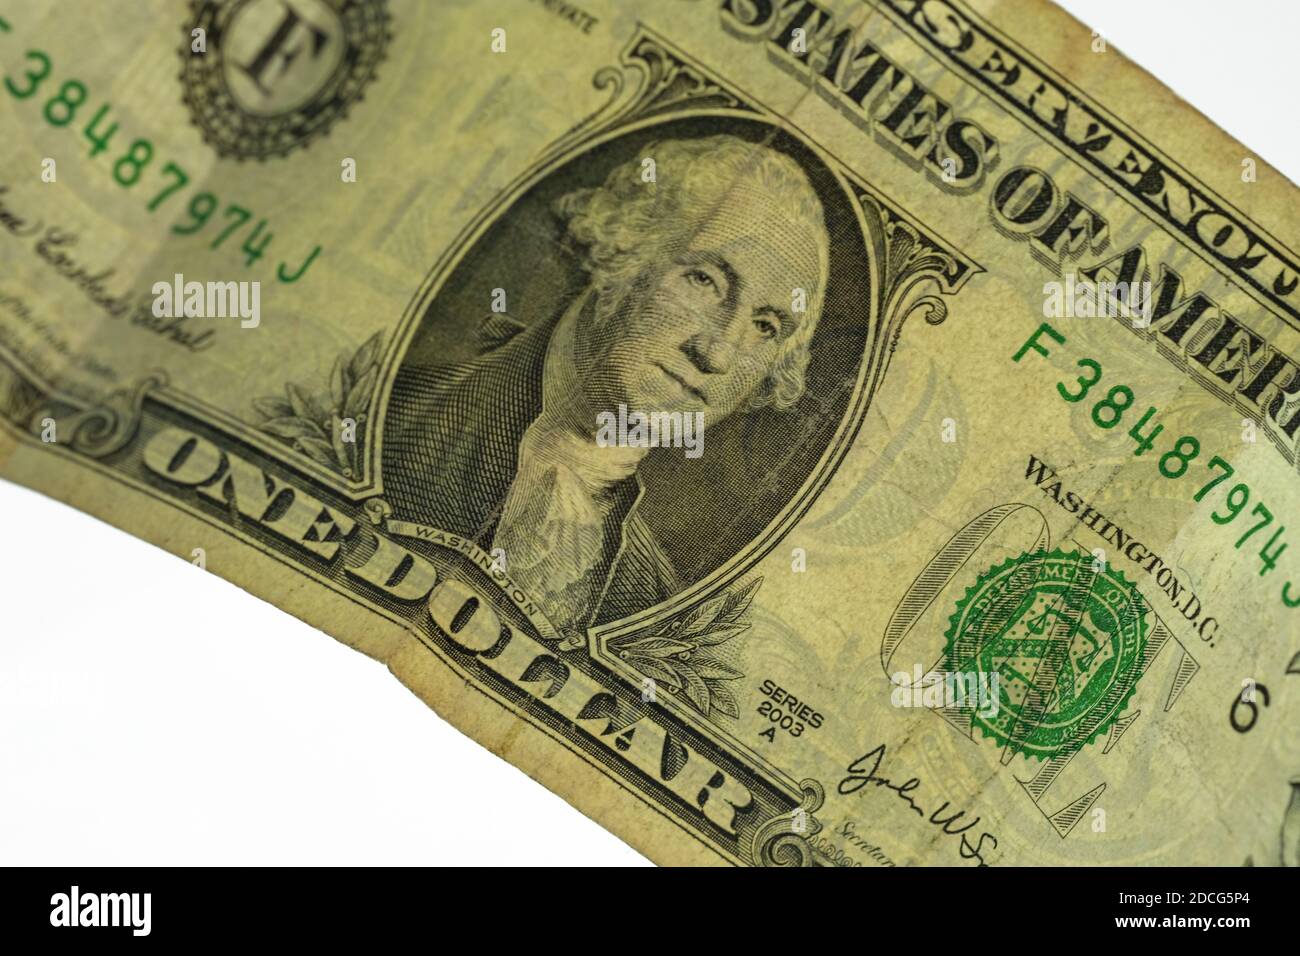 Aged One us dollar bill close up,money bills financial concept Stock Photo